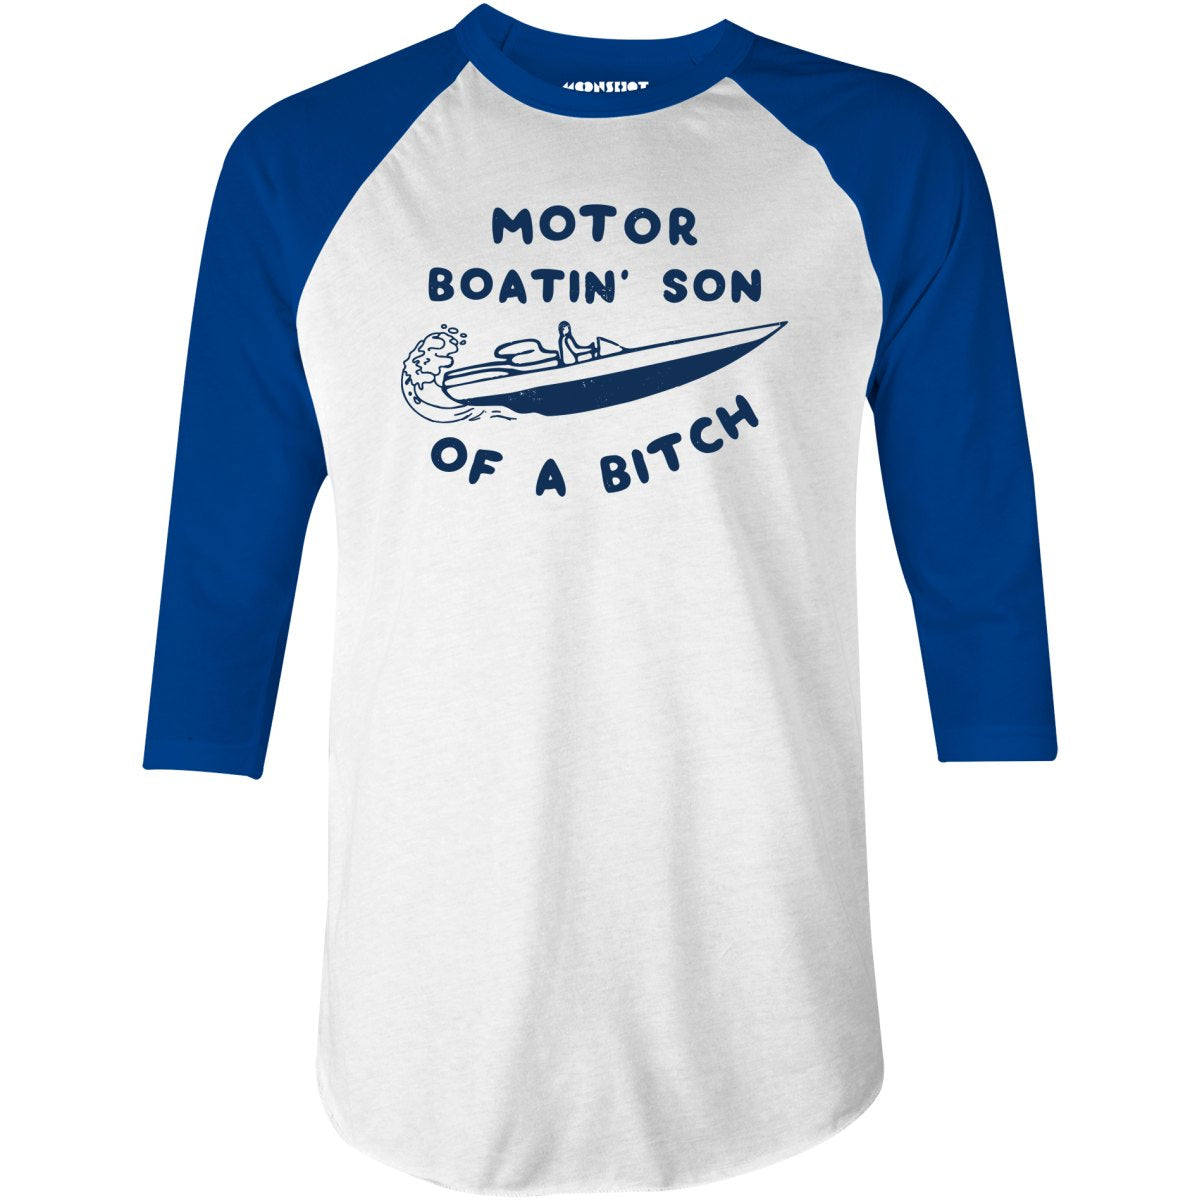 Motor Boatin' Son of a Bitch - 3/4 Sleeve Raglan T-Shirt